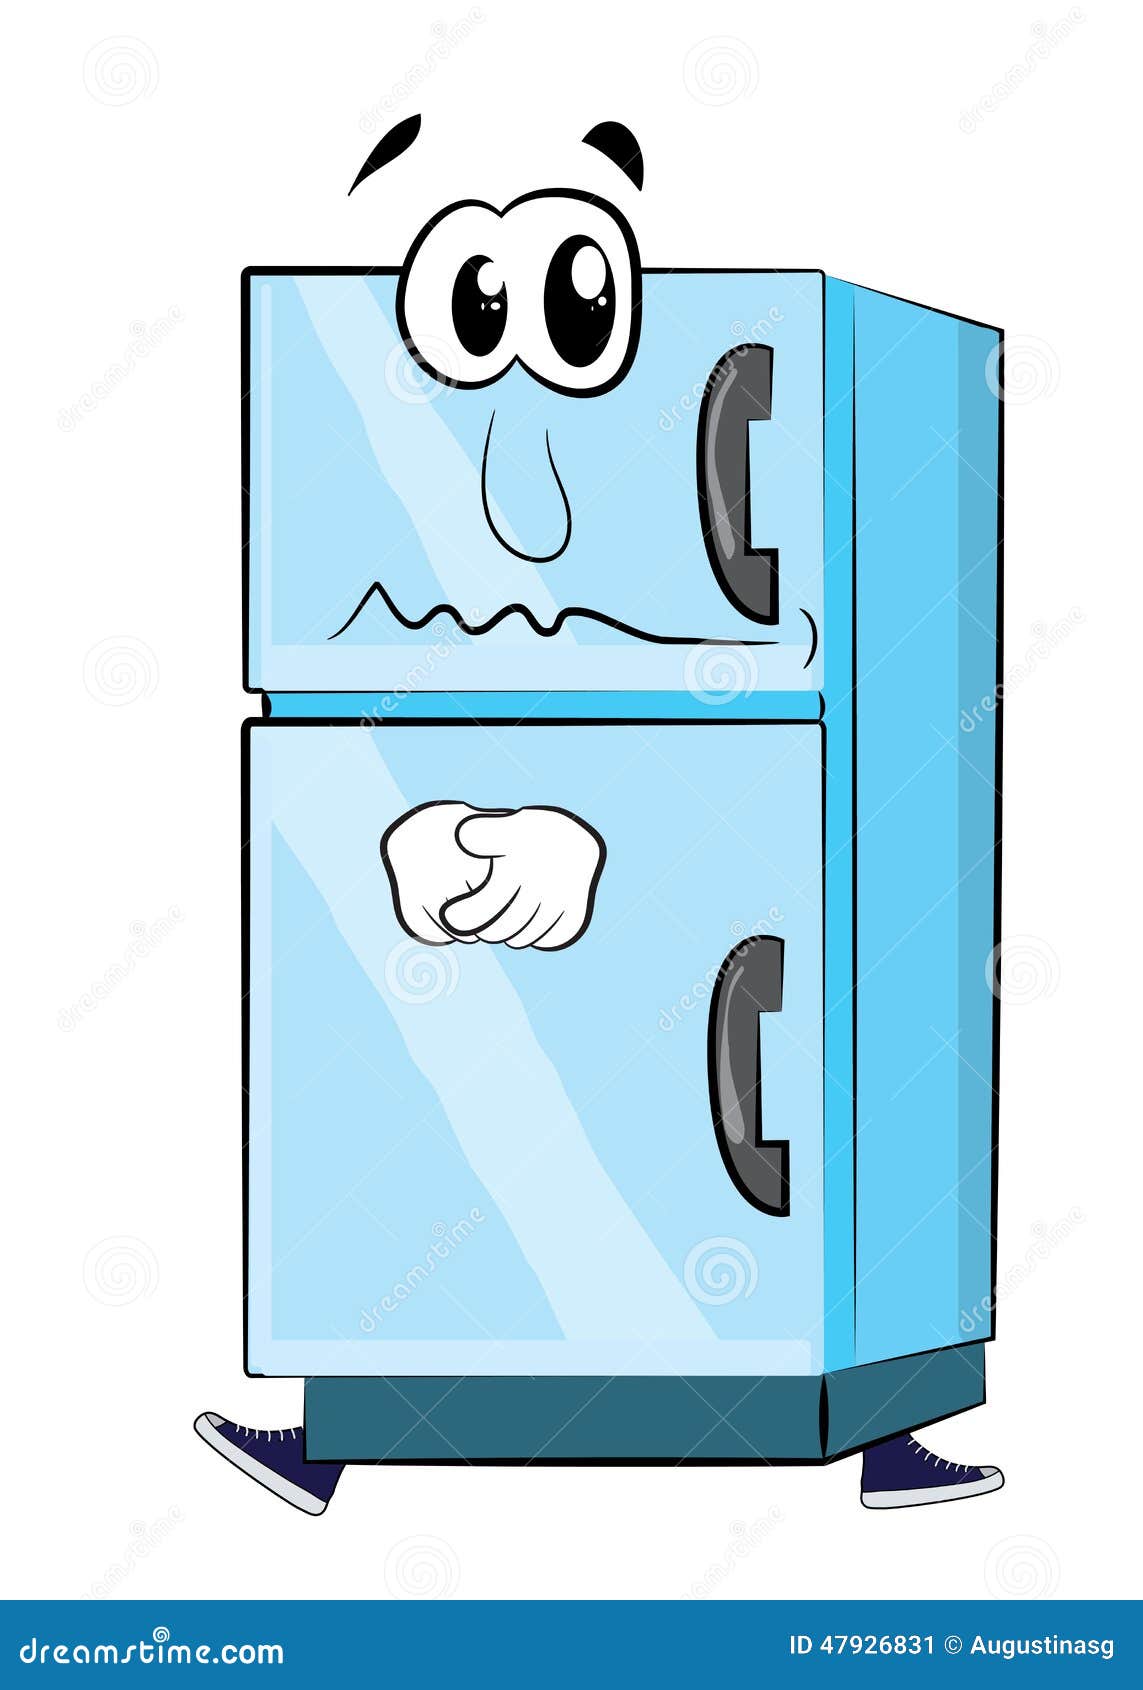 Sad fridge cartoon stock illustration. Illustration of clipart - 47926831